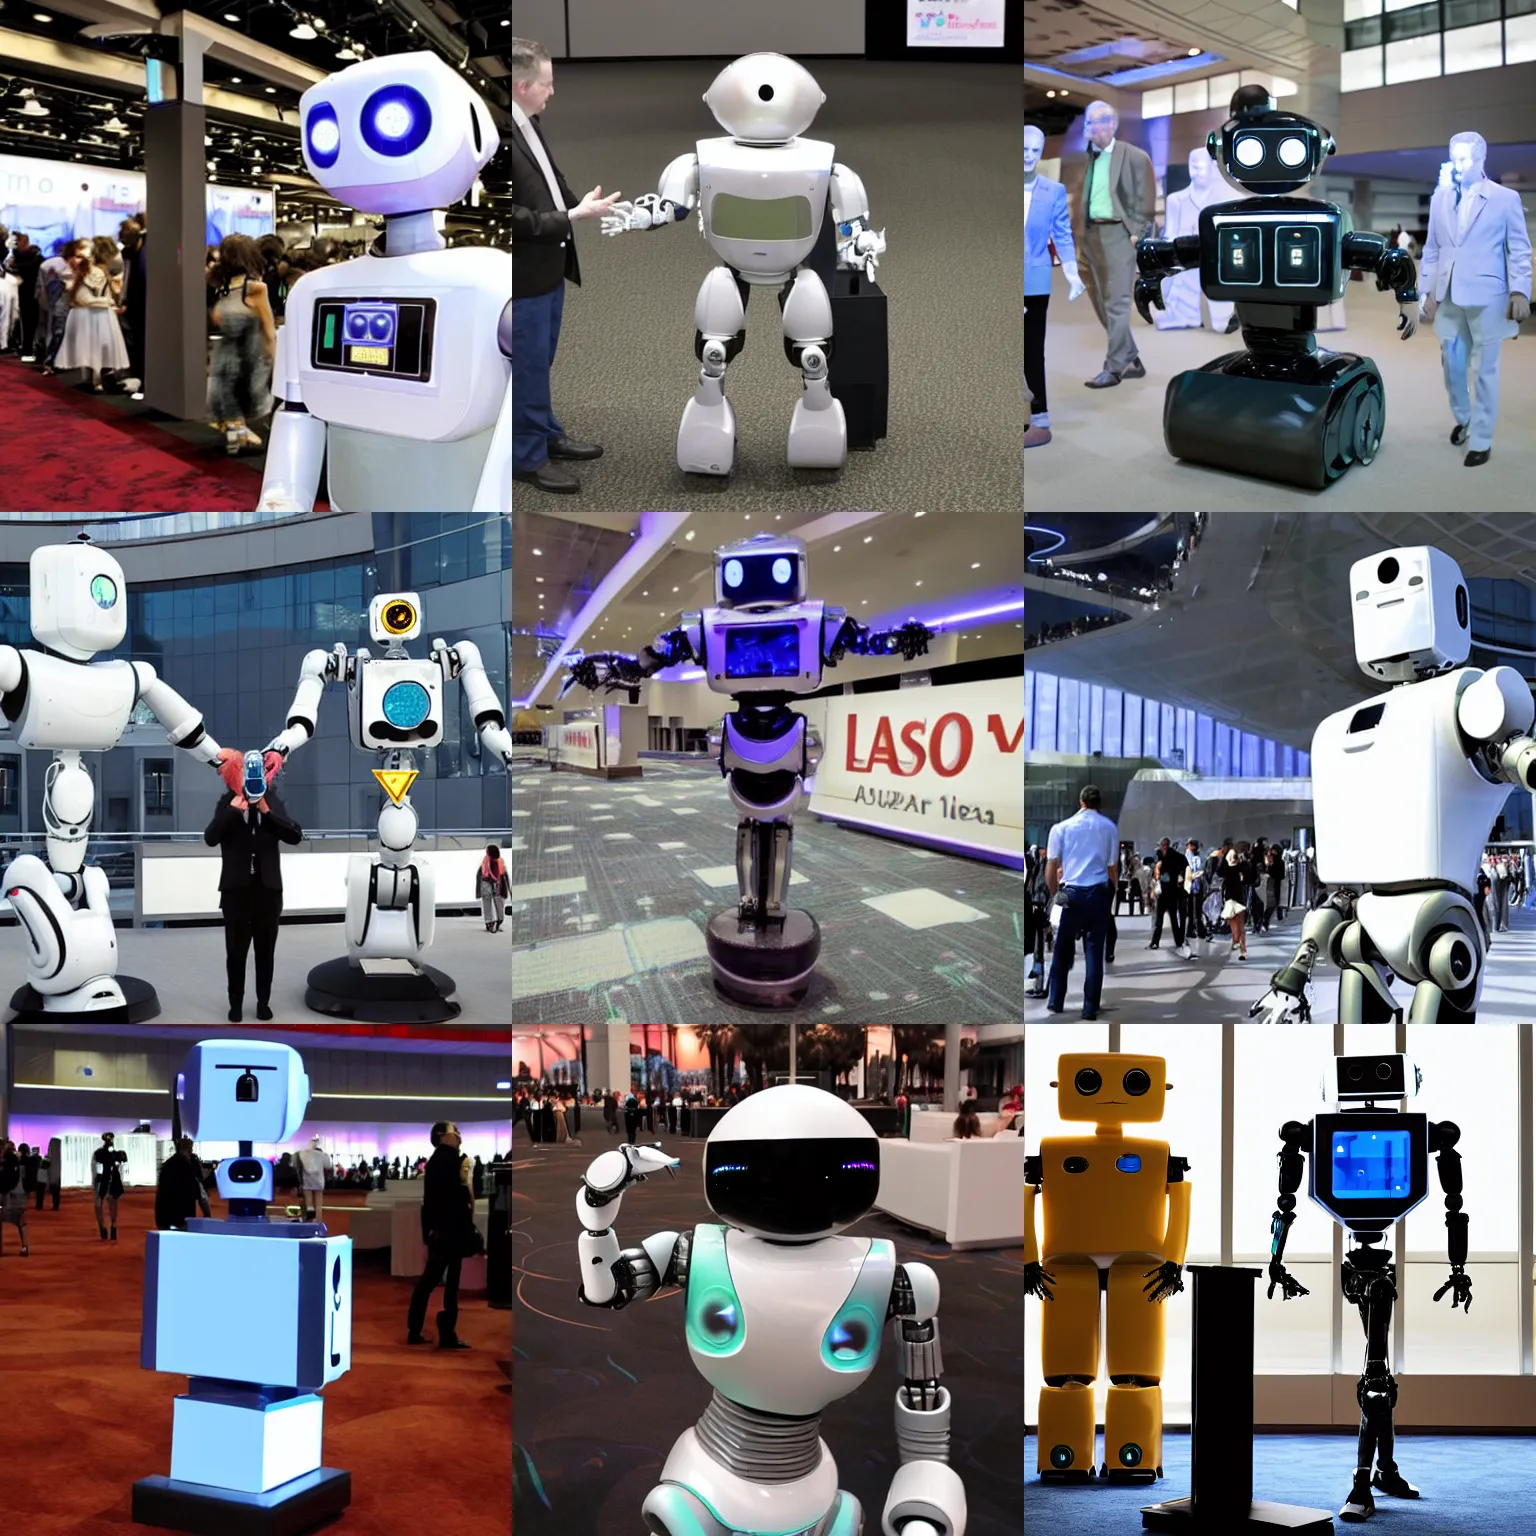 Prompt: <robot attention-grabbing surprising type='futuristic' location='las vegas convention center'>absurd robot shows ability</robot>